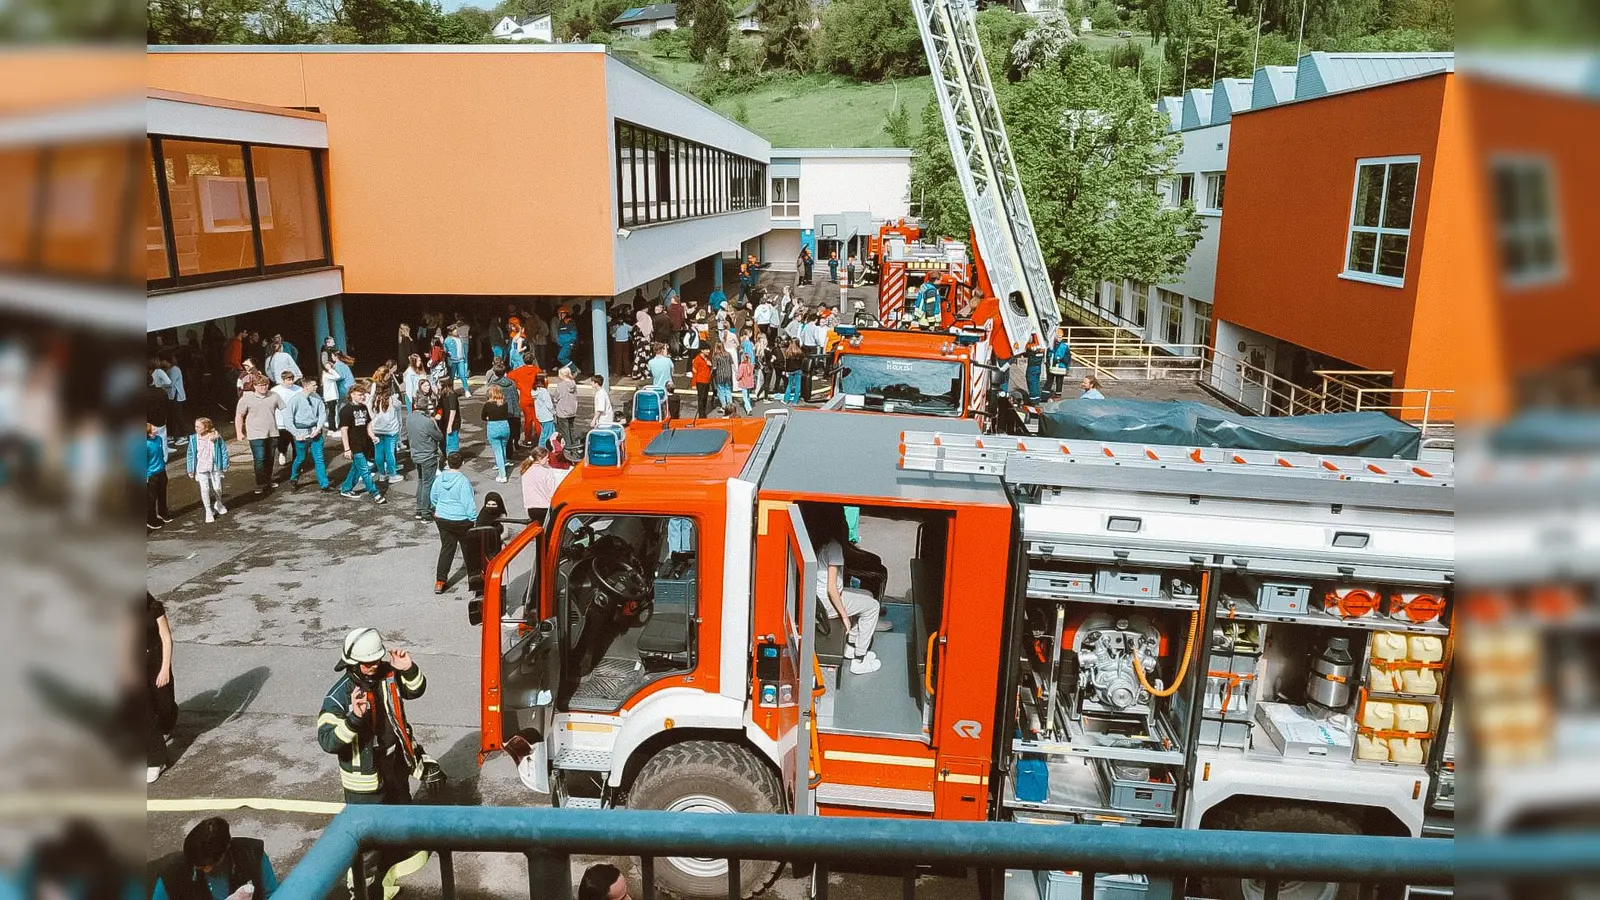 Feuerwehrübung in der Sekundarschule Beverungen. (Foto: Kira Mönnekes/Sekundarschule Beverungen)